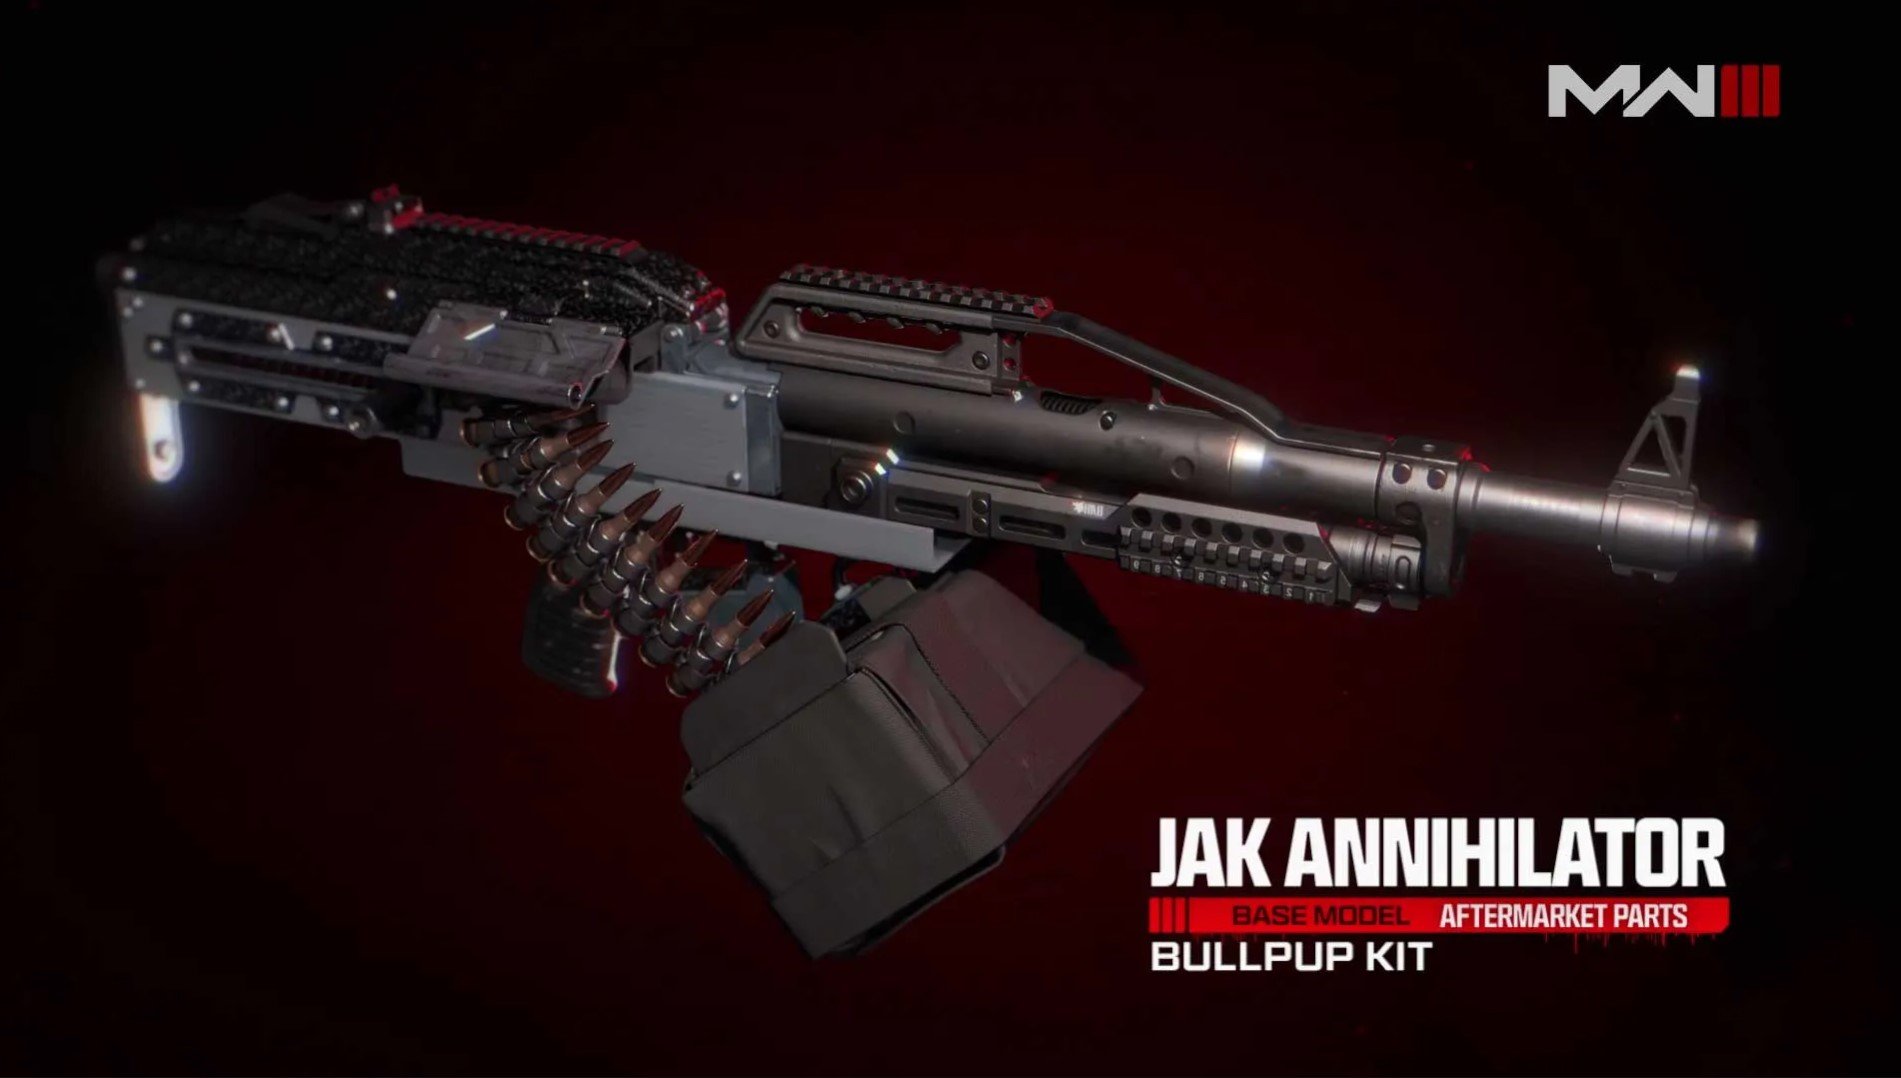 mw3 jak annihilator bullpup kit